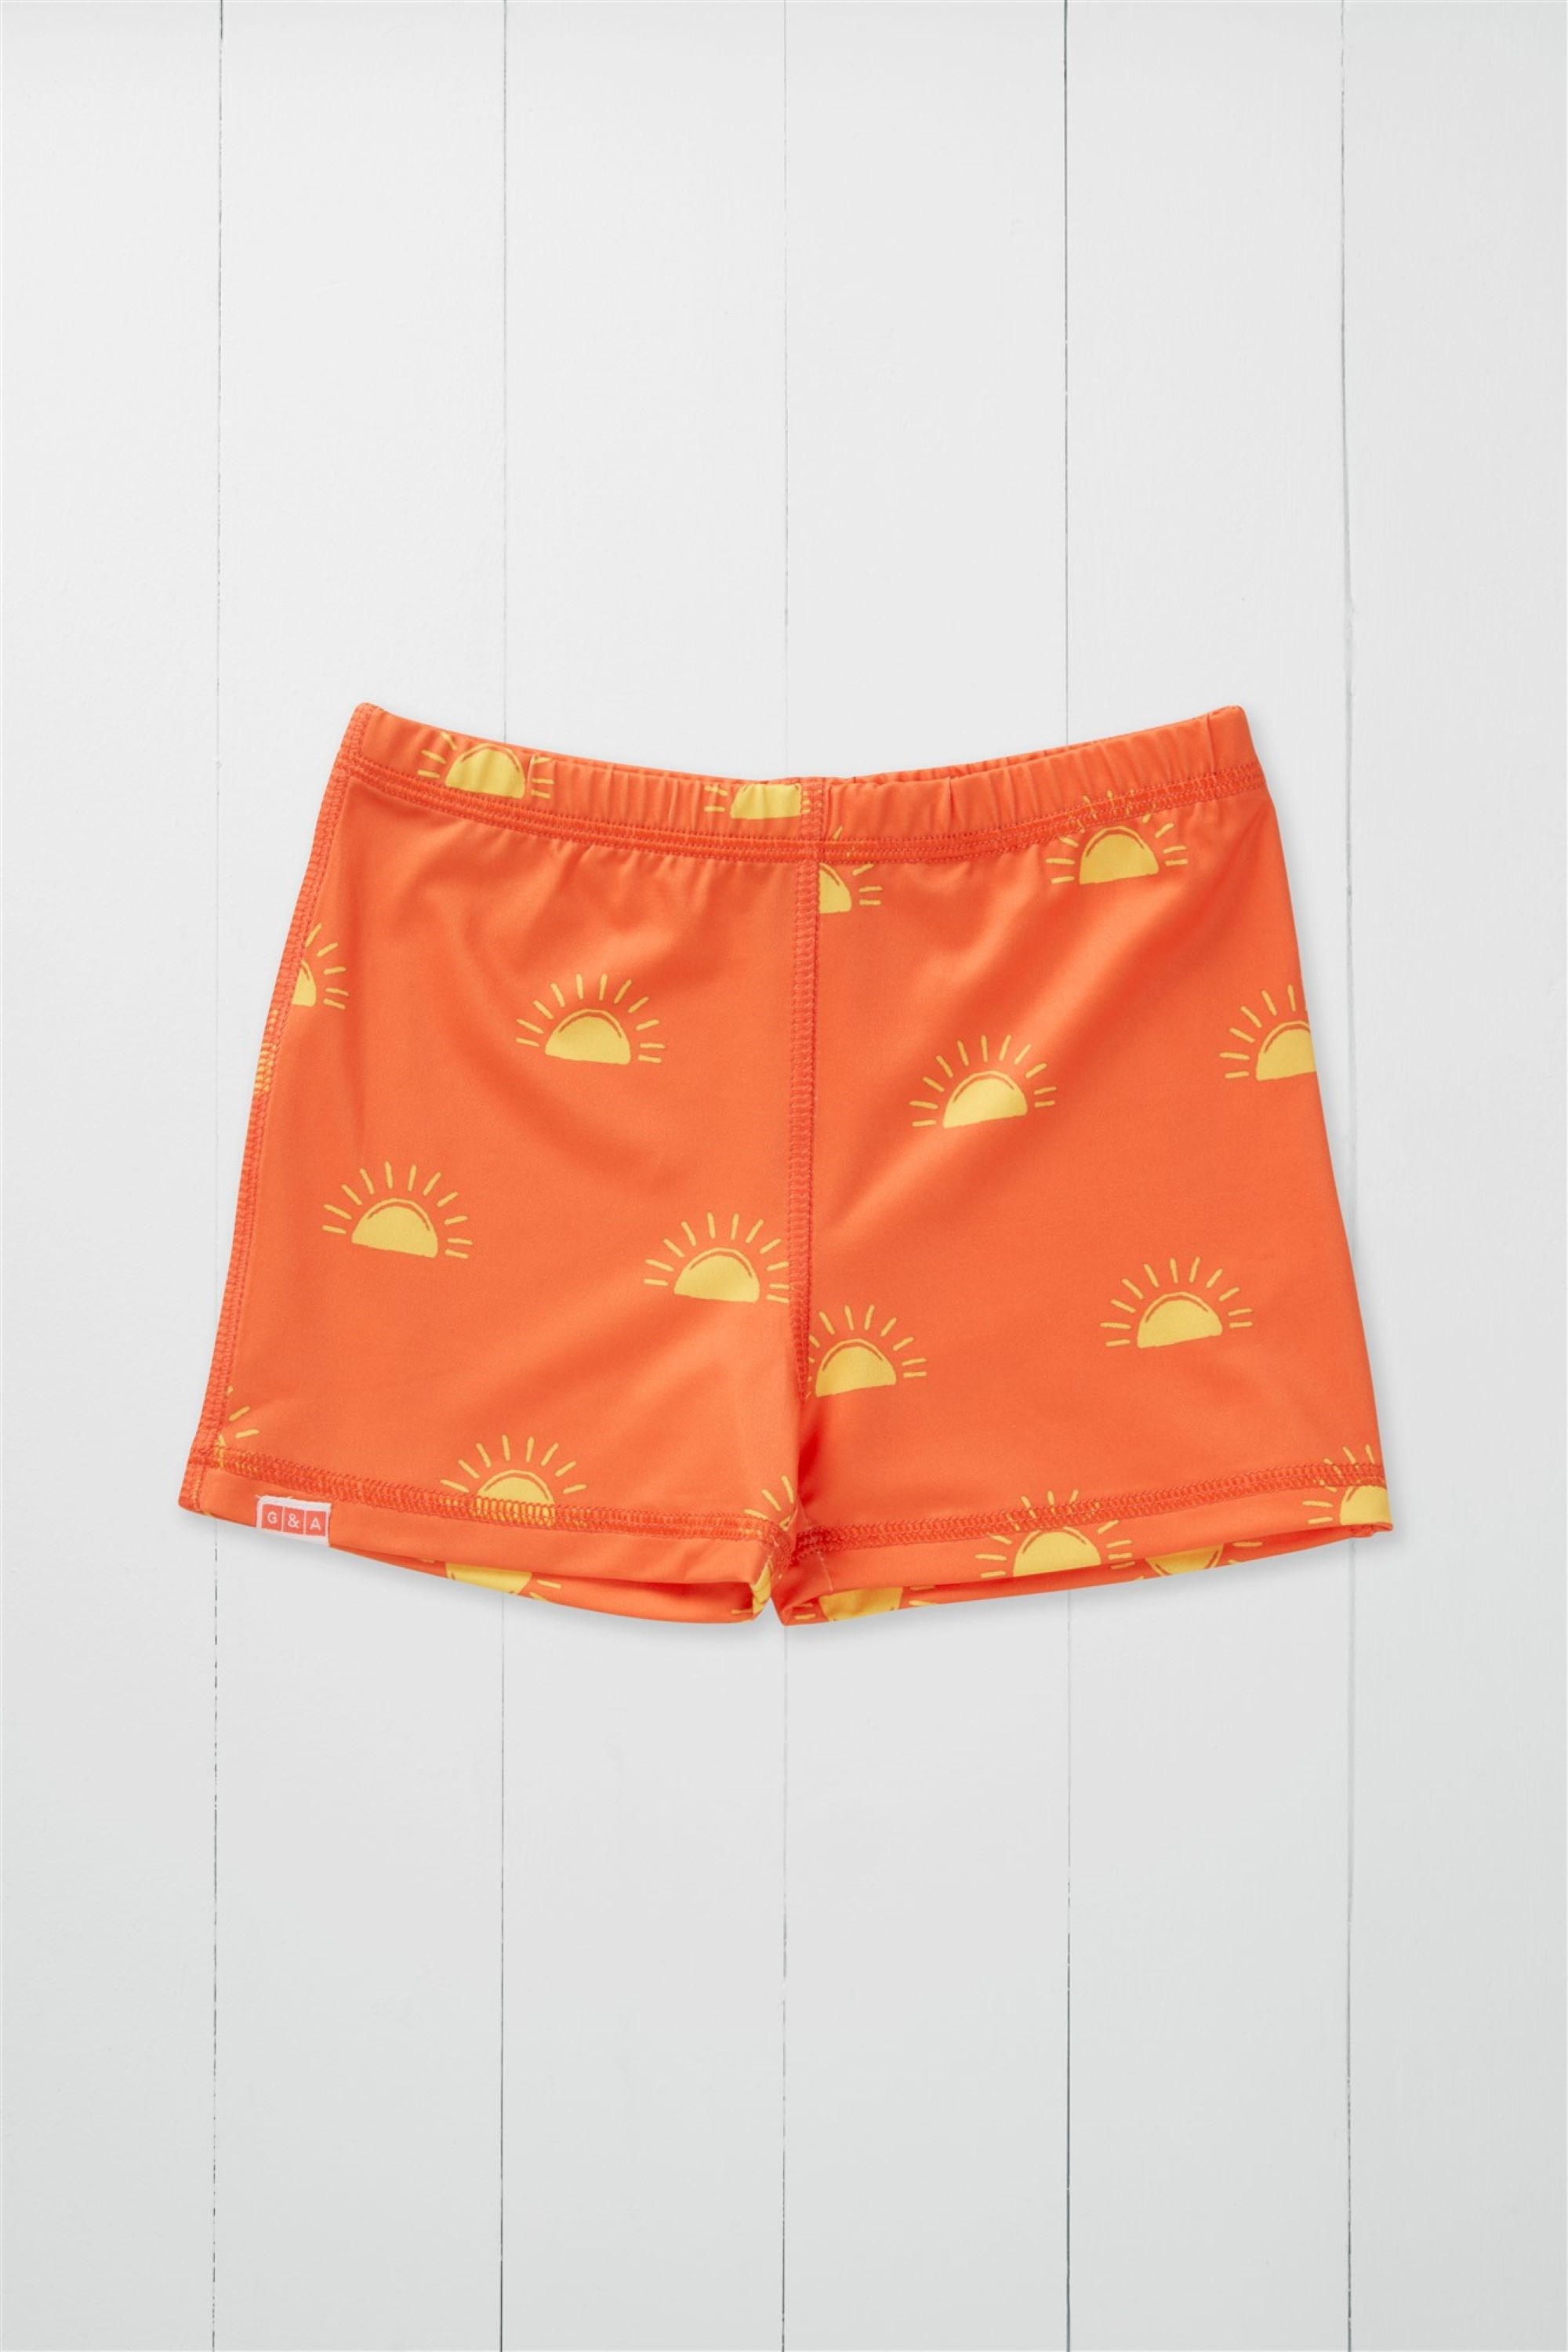 Sunprint Kids Shortie Swim Shorts -